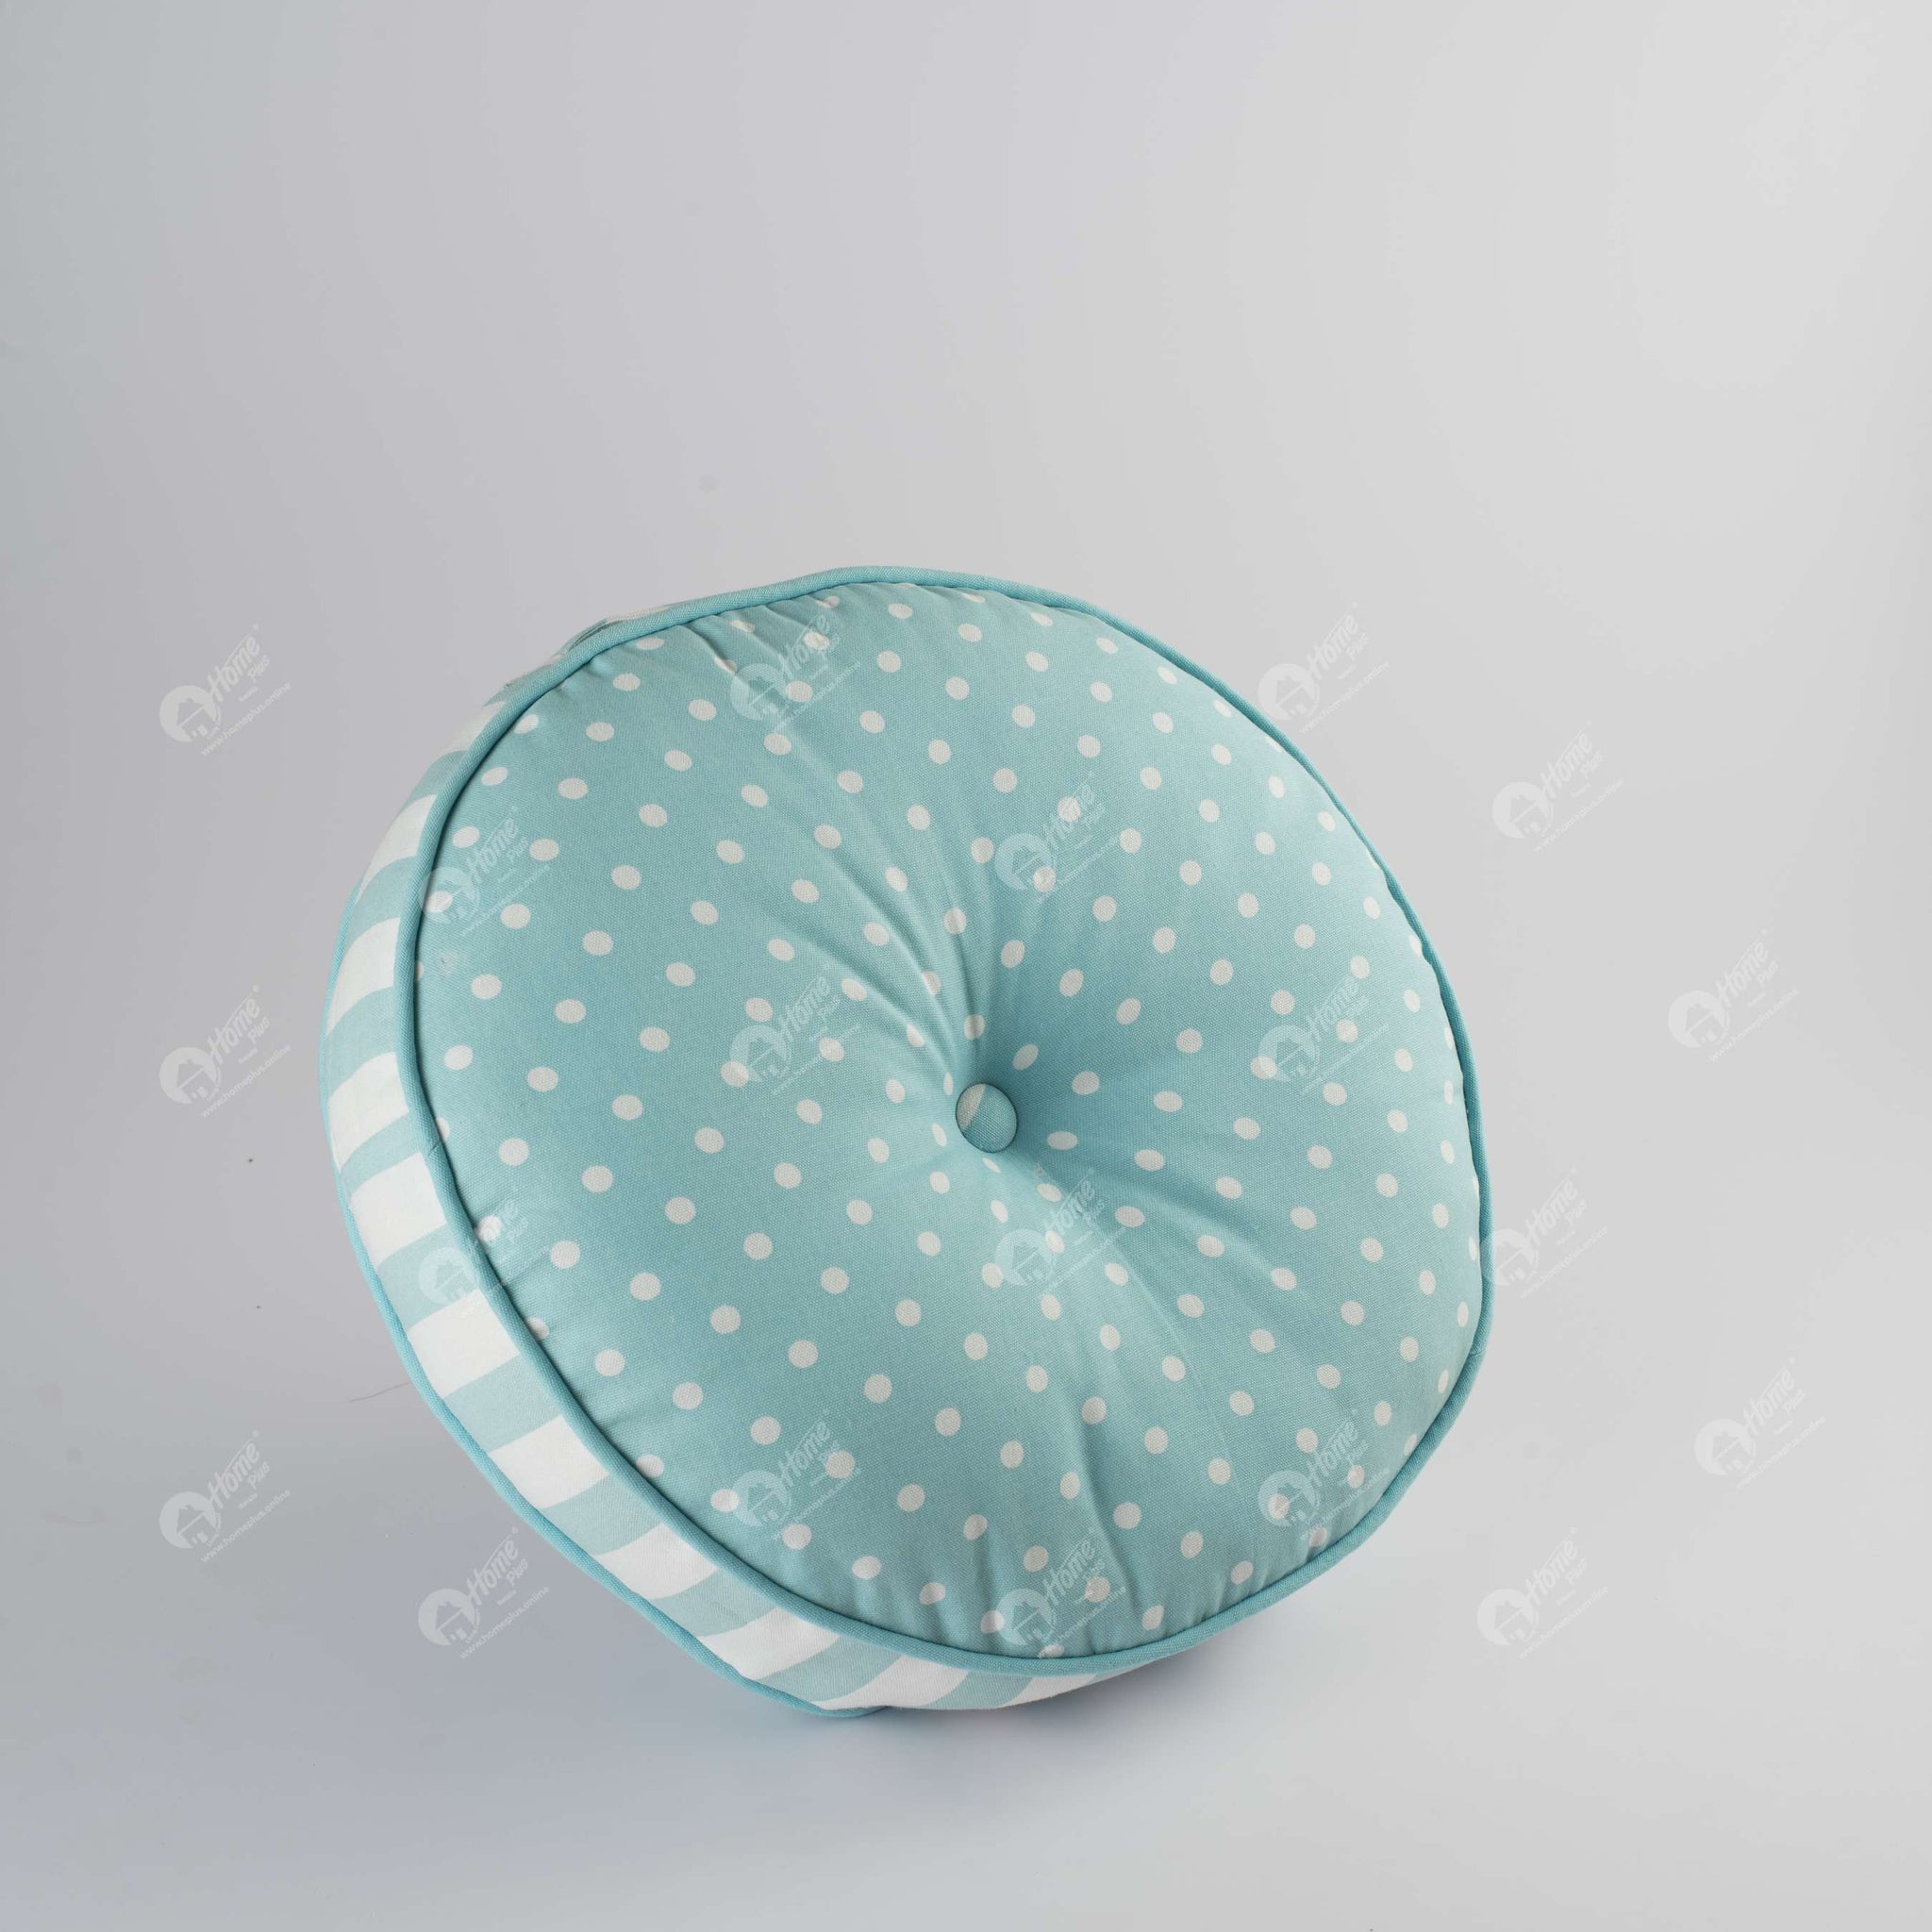 Floor Cushion R - Polka Dot Blue